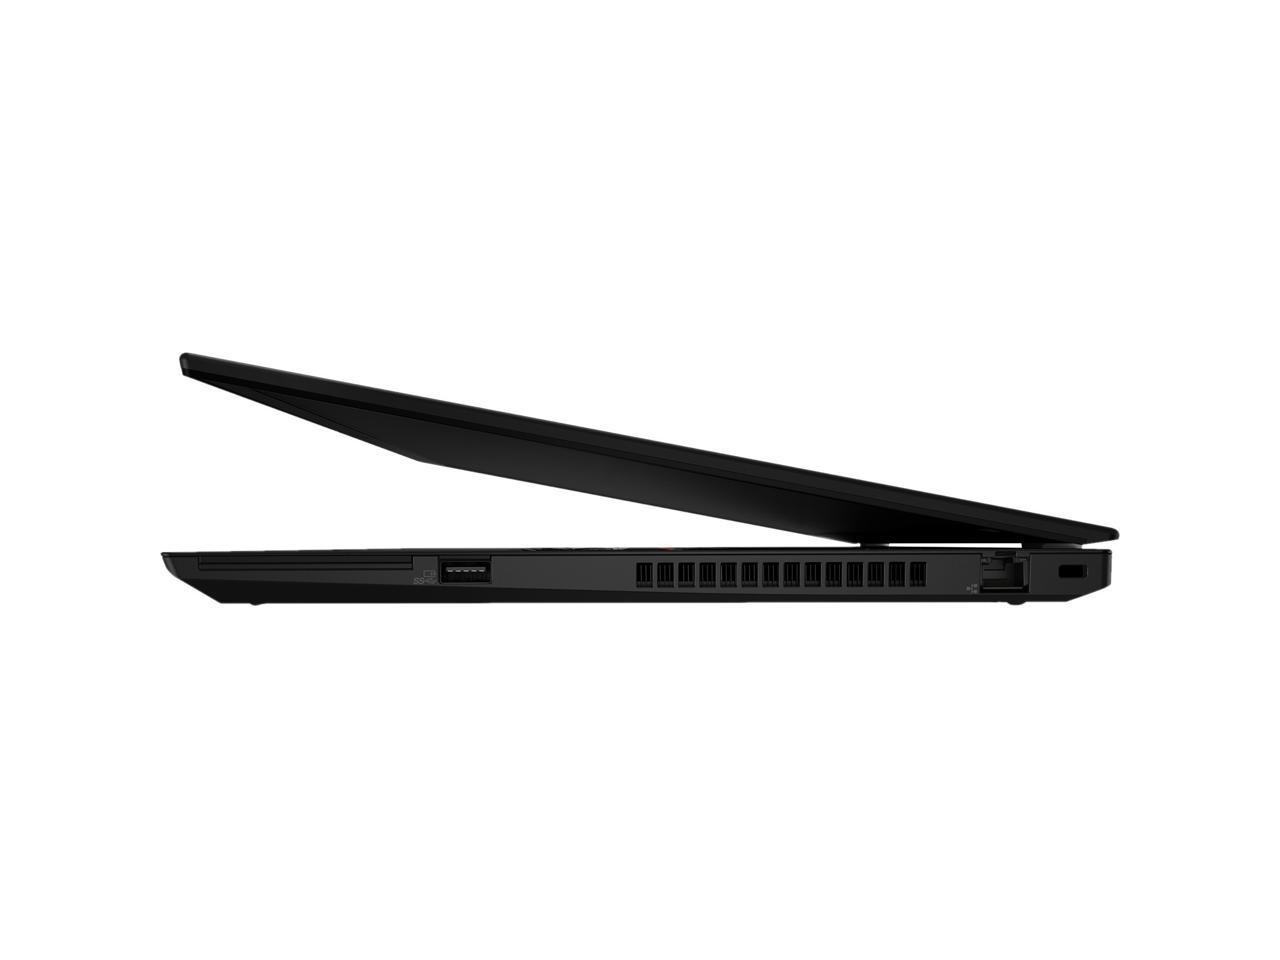 Lenovo ThinkPad 20S6001WUS 15.6" Touchscreen Laptop i7-10610U 16GB 512GB SSD W10